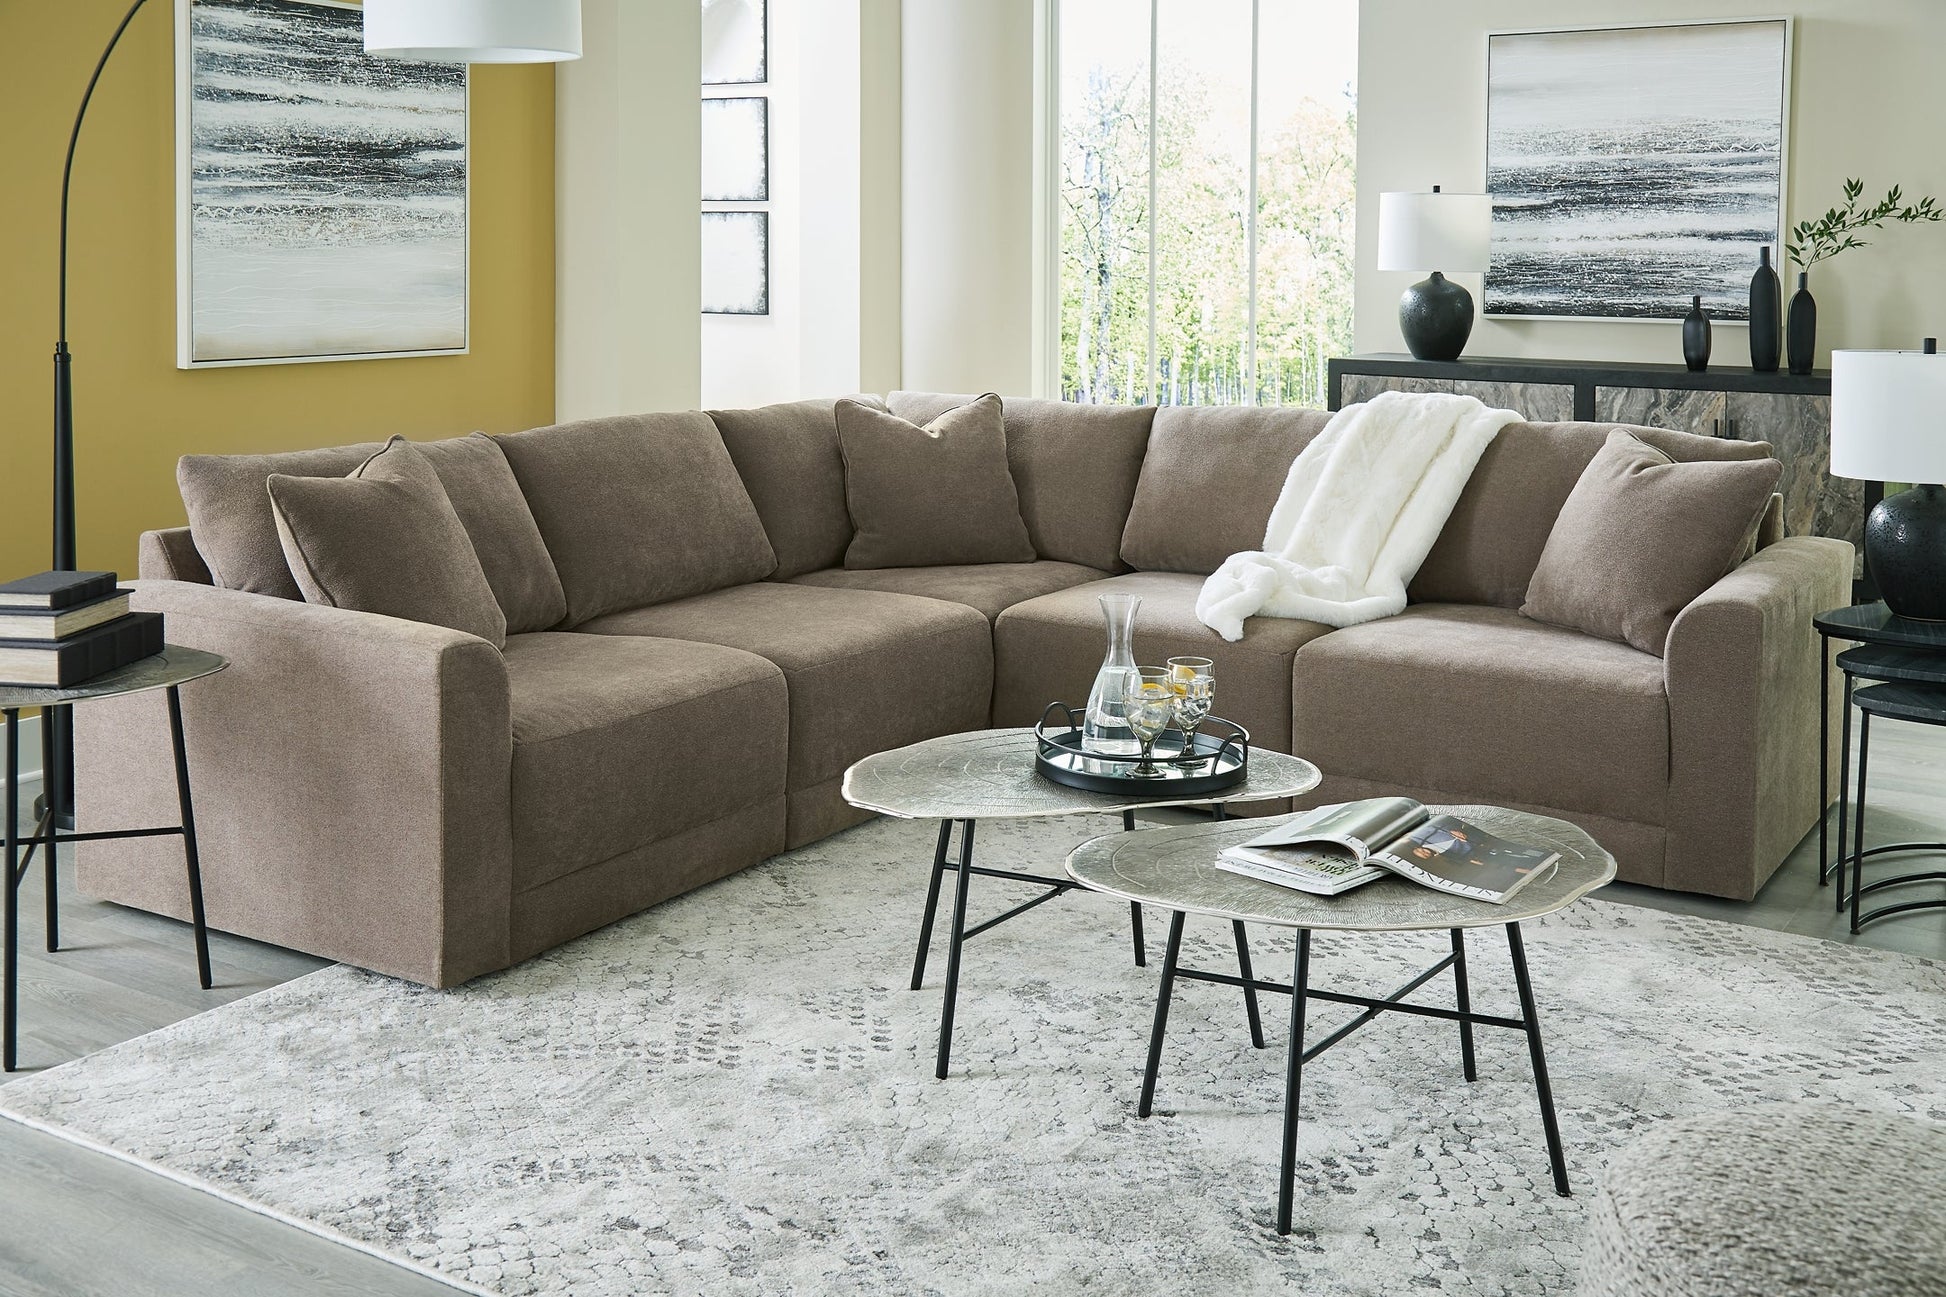 Raeanna 5-Piece Sectional at Cloud 9 Mattress & Furniture furniture, home furnishing, home decor